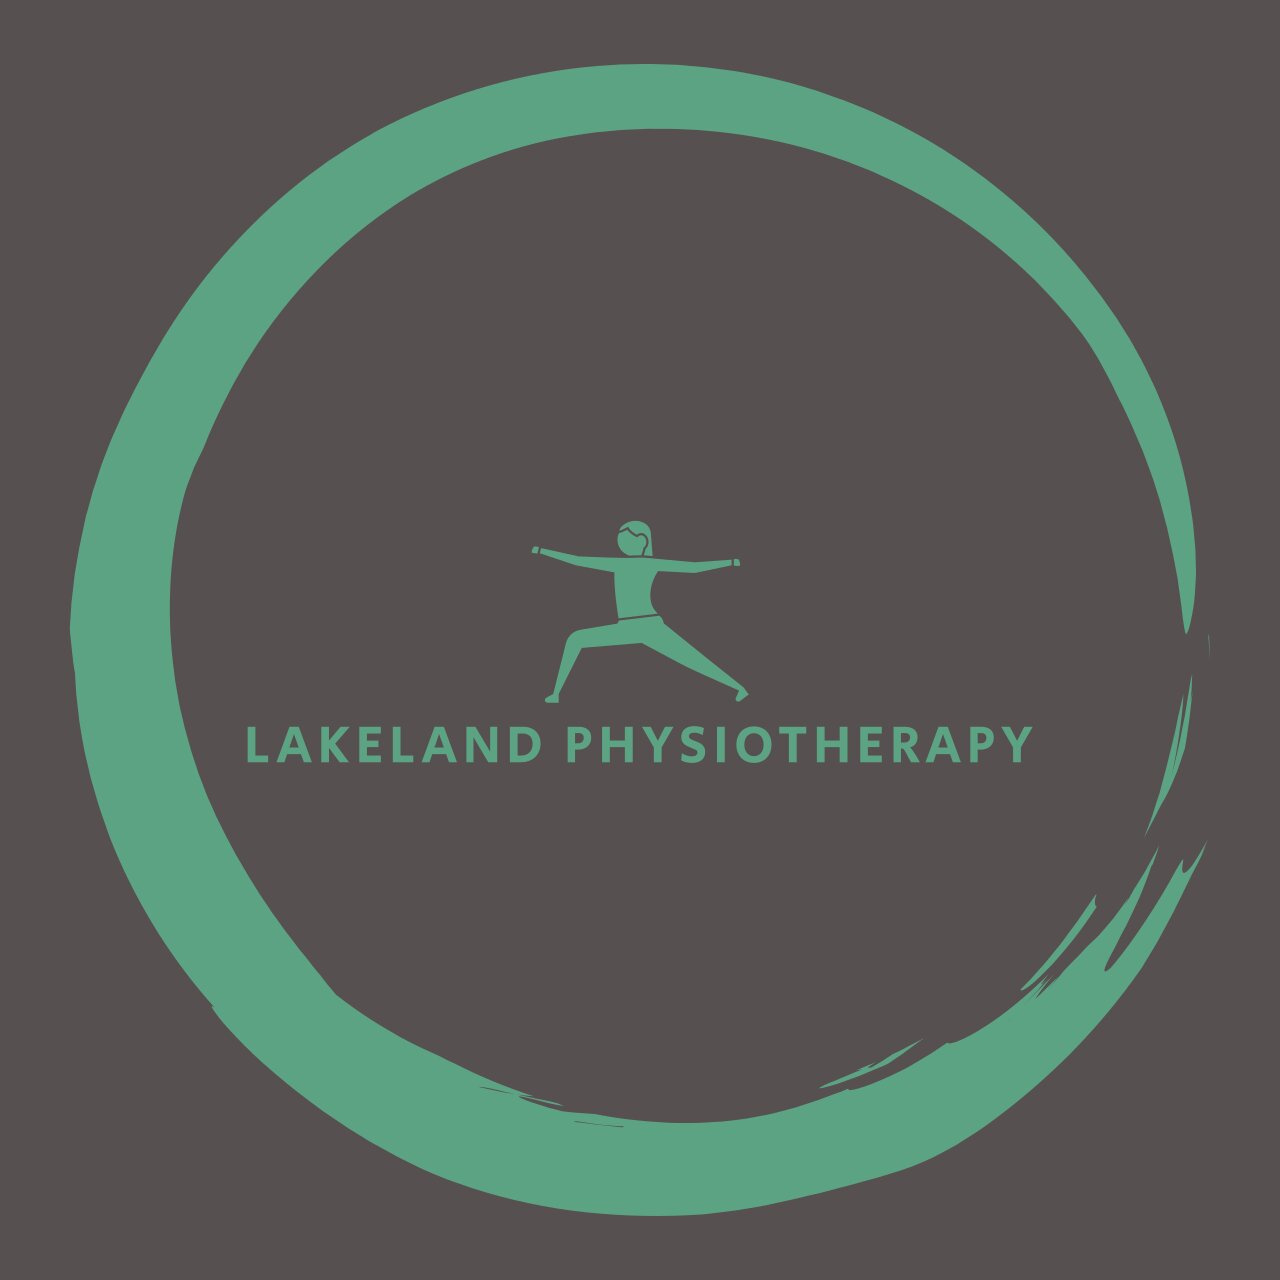 Lakeland Physiotherapy